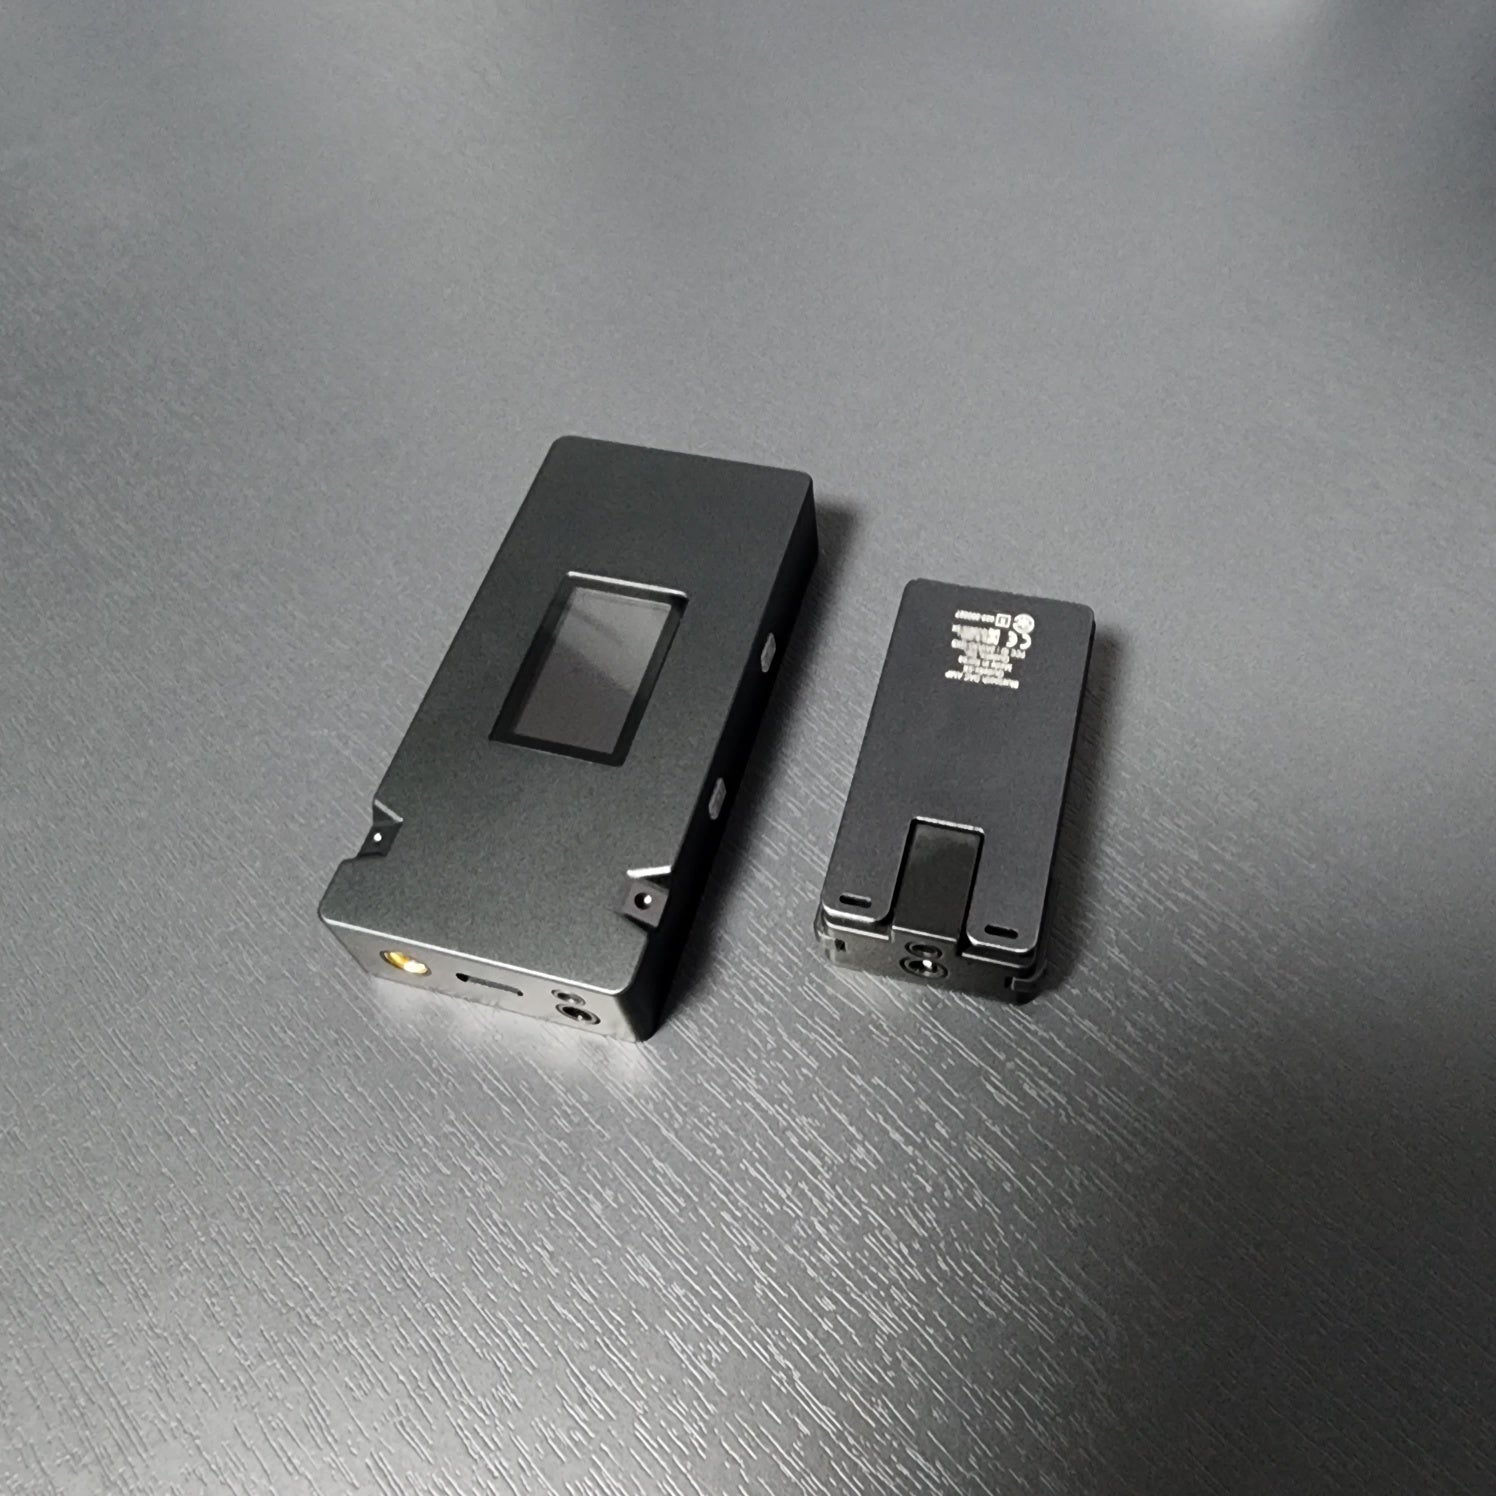 Qudelix-T71 USB DAC